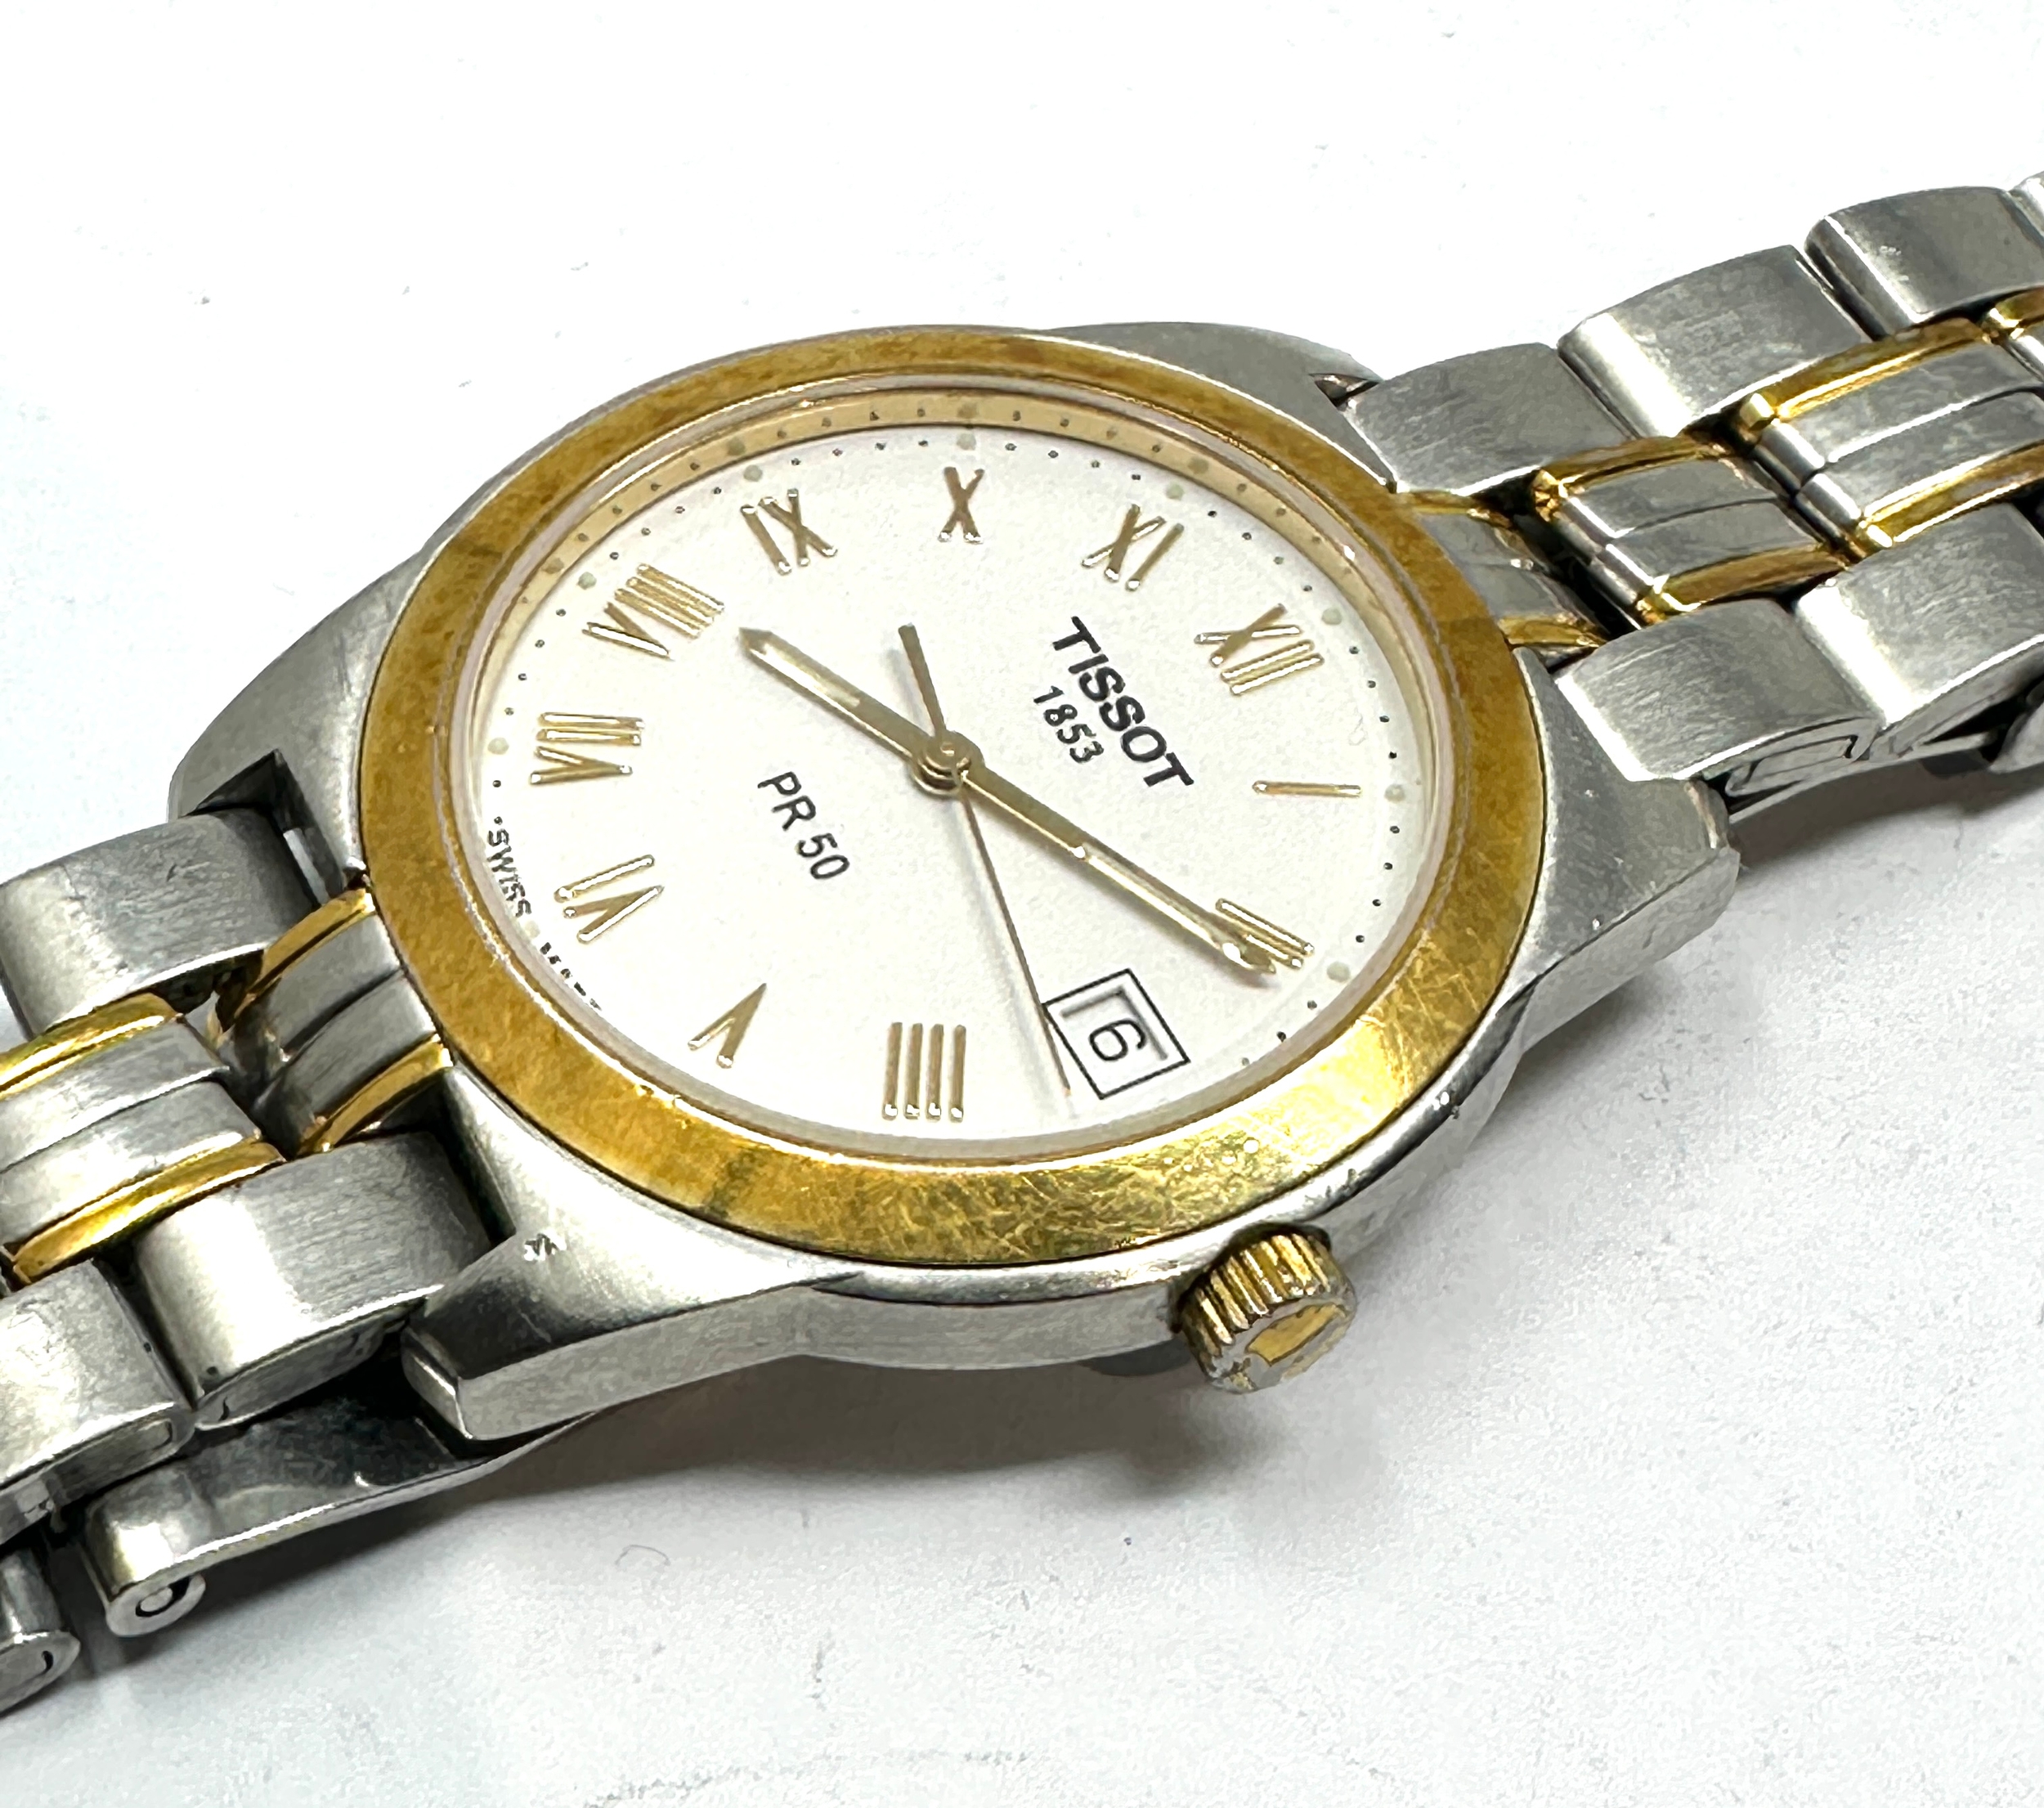 Gentys Tissot 1853 pr50 quartz wristwatch j376/476 the watch is ticking - Image 2 of 4